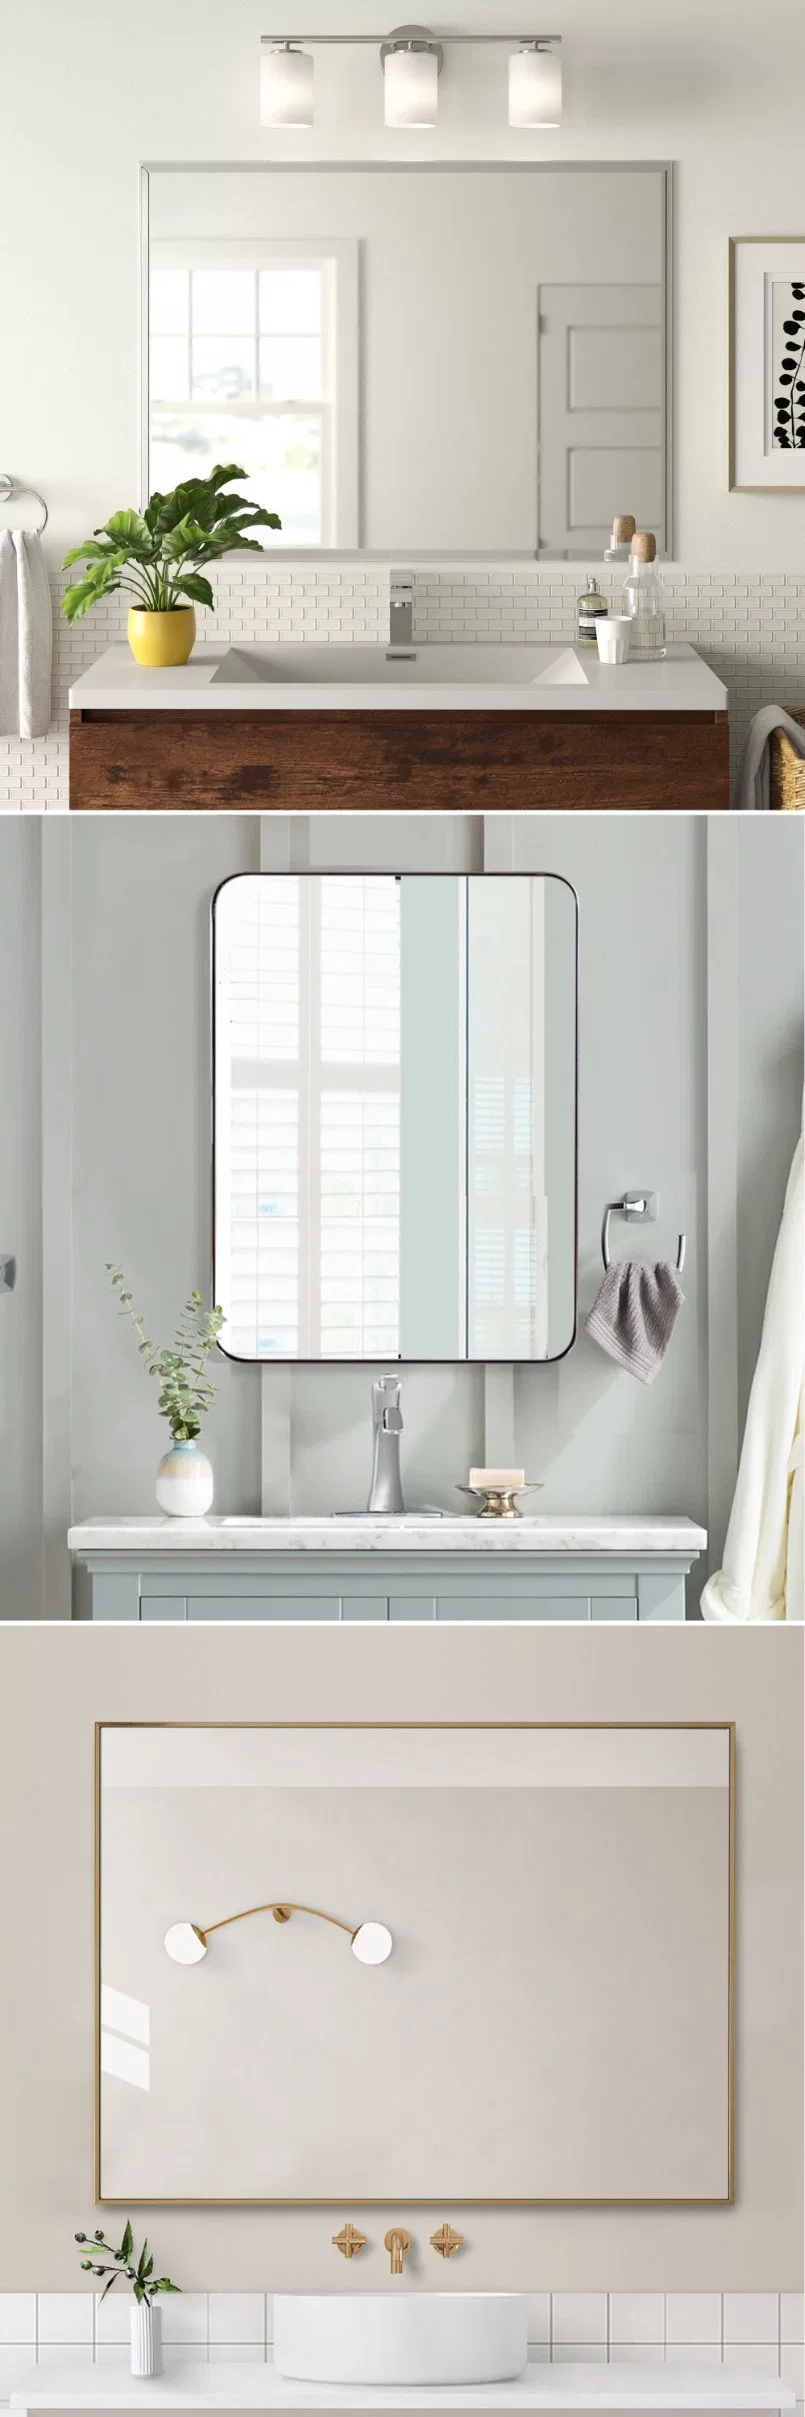 Ortonbath White Arched Framed Bath Home Smart Wall Mounted Non-LED Mirror Bathroom Designer Decorative Art Mirror